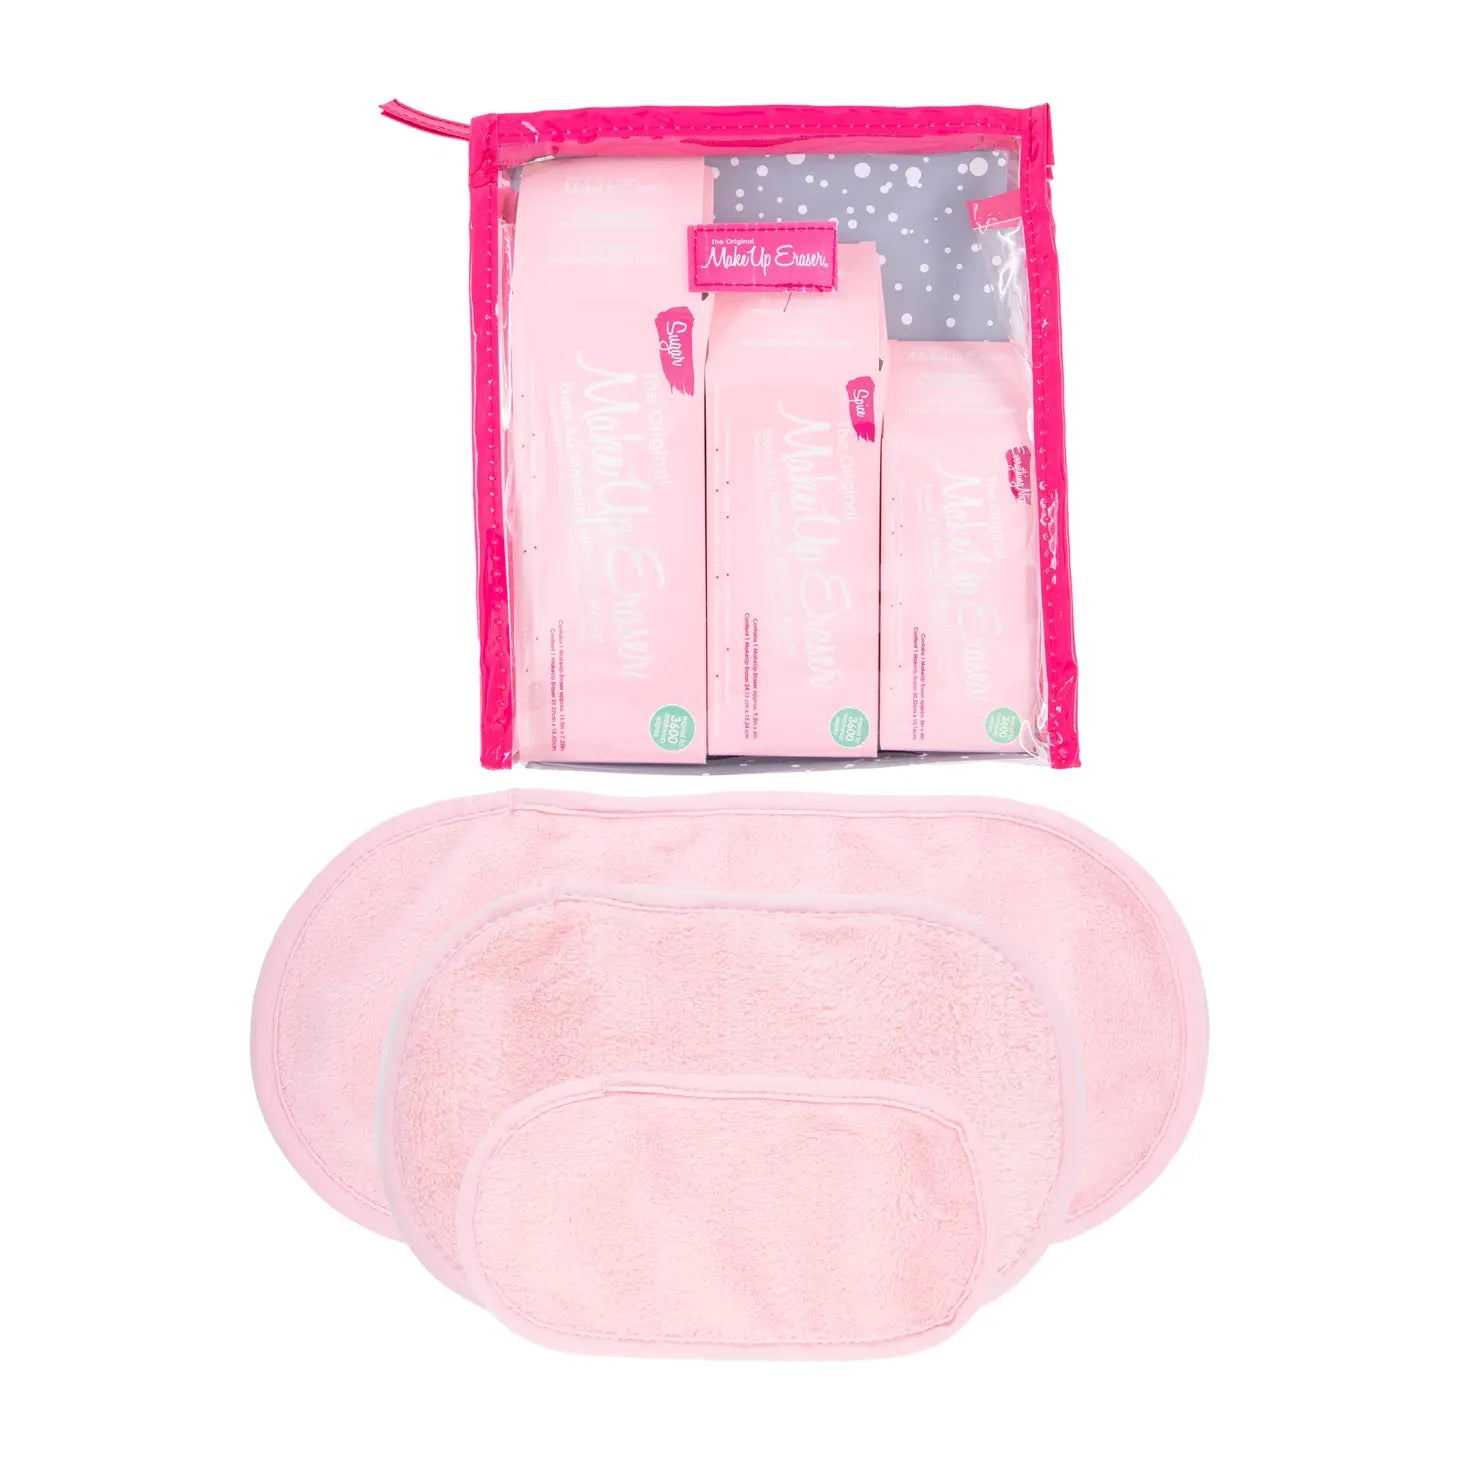 The Original Makeup Eraser Sugar Plum 3PC Set